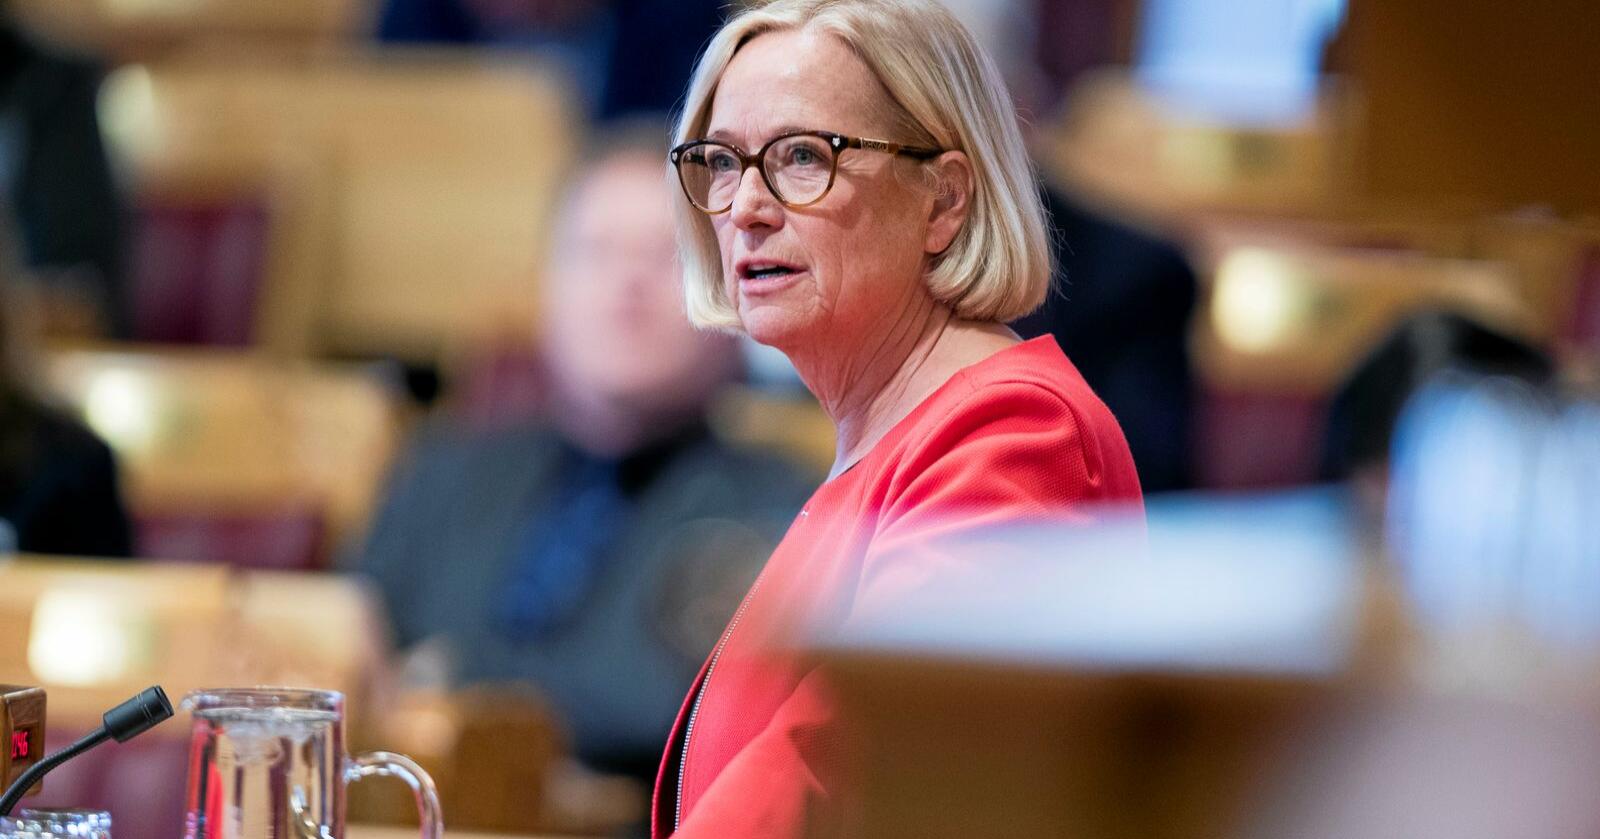 Får kritikk: Parlamentarisk leder for Sp, Marit Arnstad. Foto: Terje Pedersen / NTB scanpix